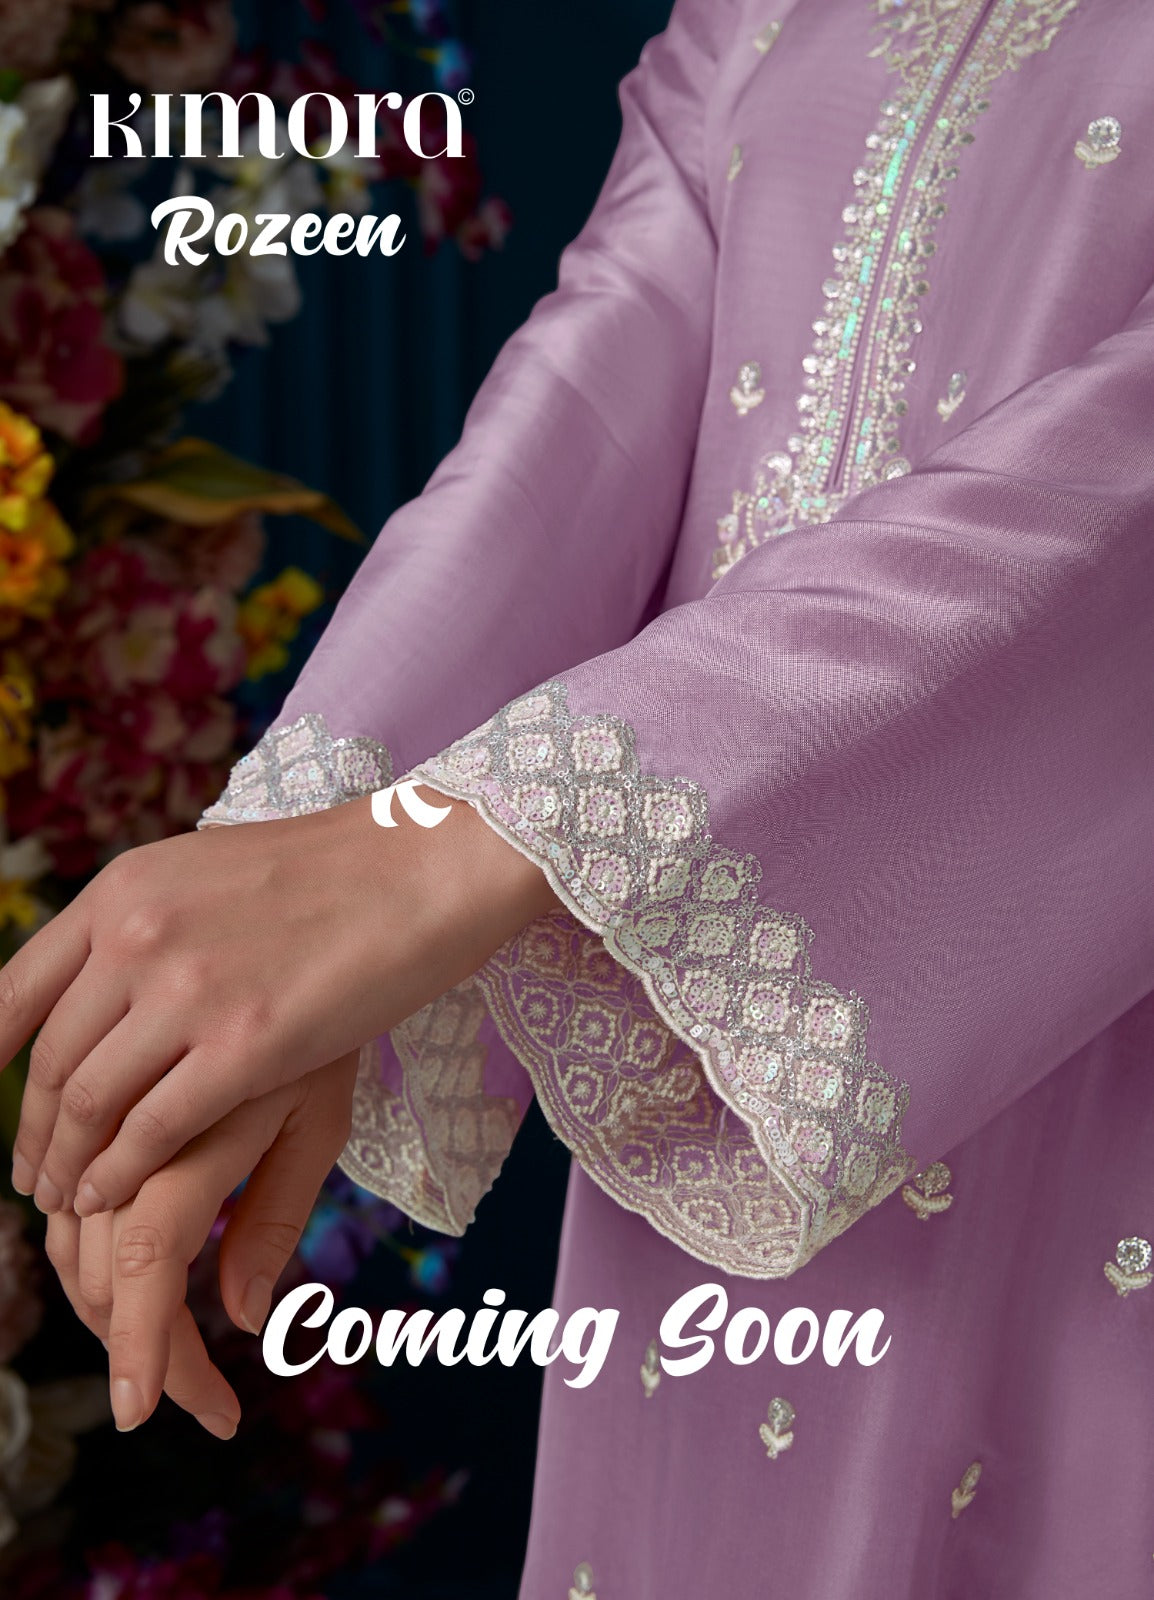 Rozeen Kimora Heer Modal Silk Pant Style Suits